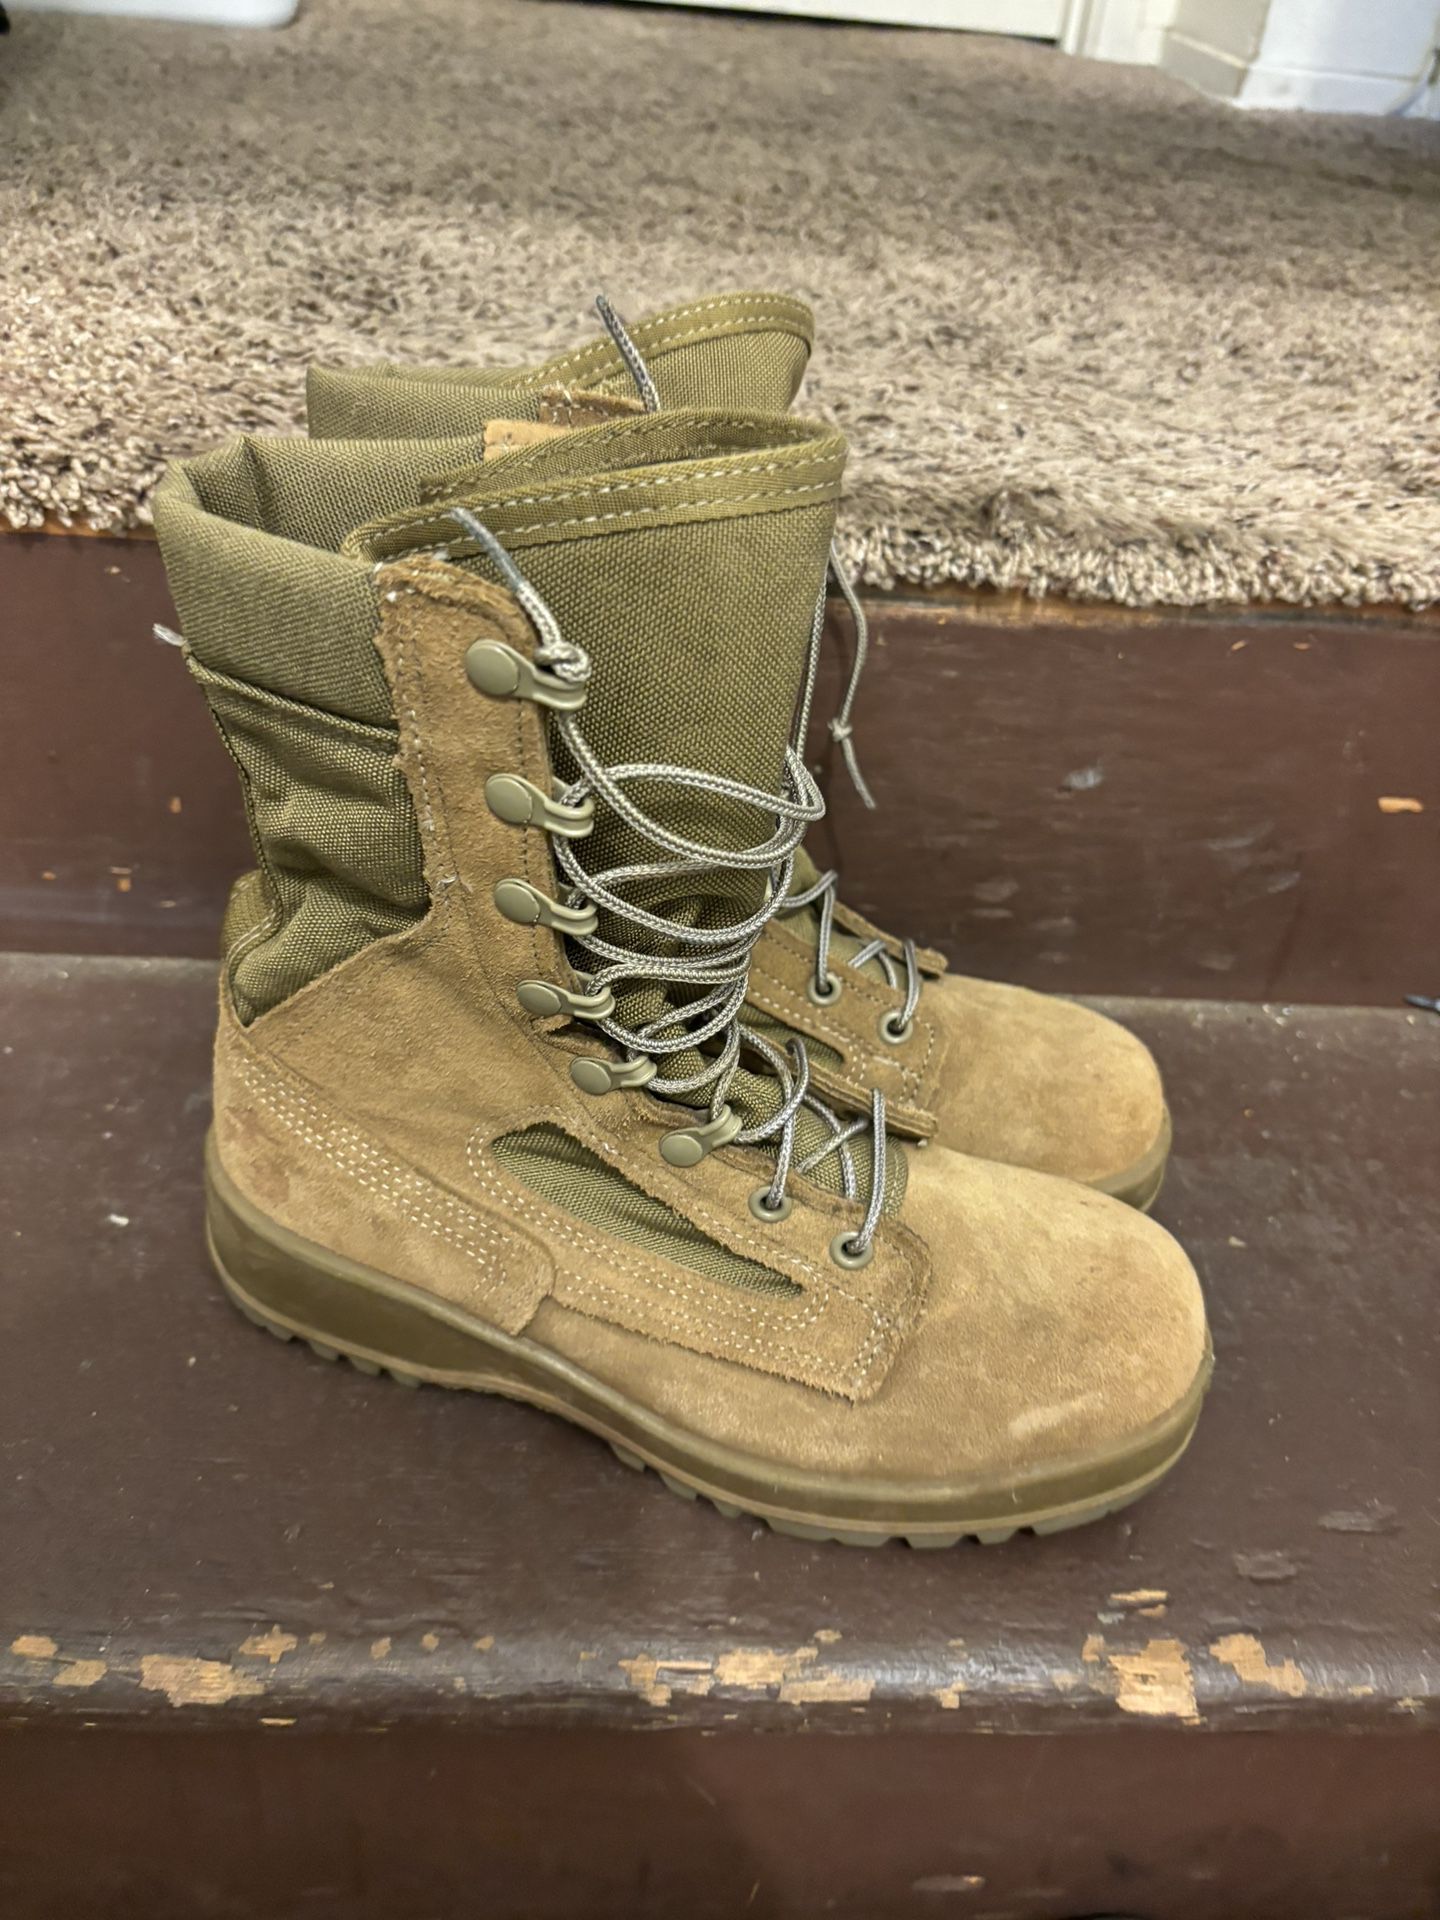 Belleville Waterproof Work Boots